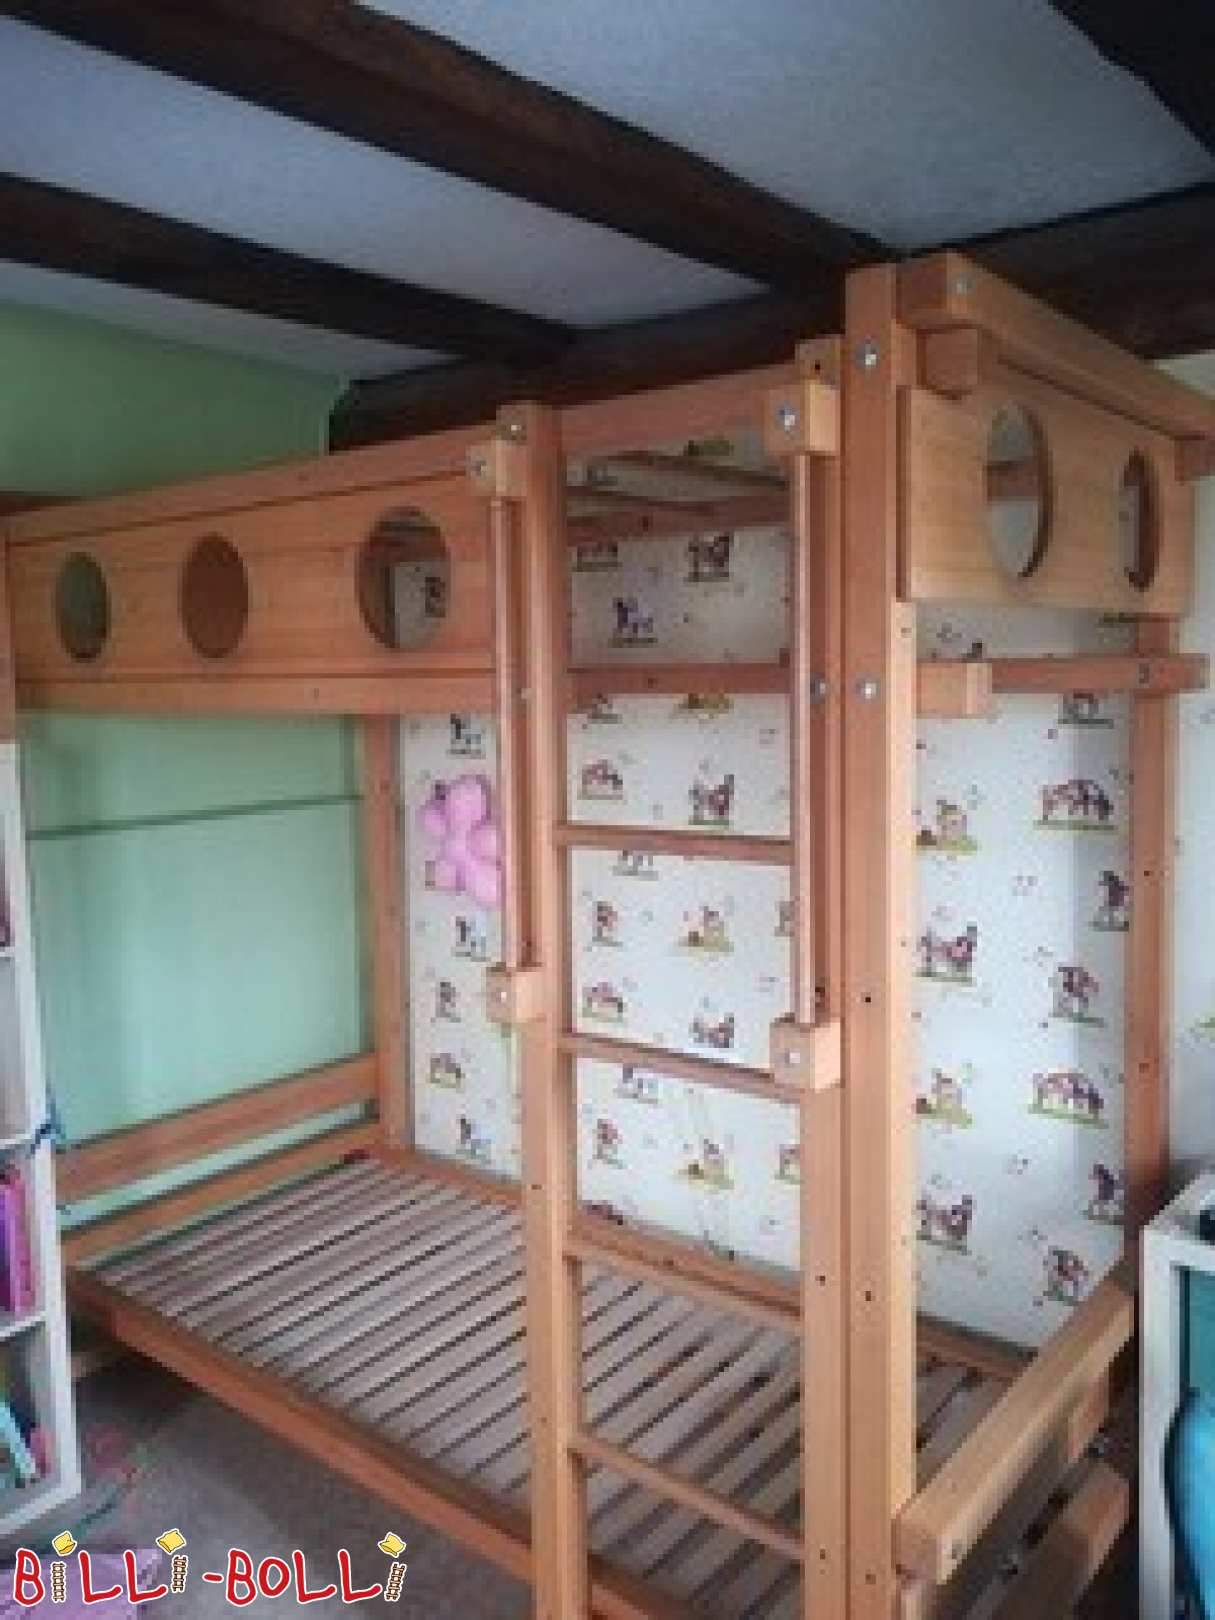 Krevet u potkrovlju s porthole daskama i visećim skelama (Kategorija: Korišten krevet u potkrovlju)